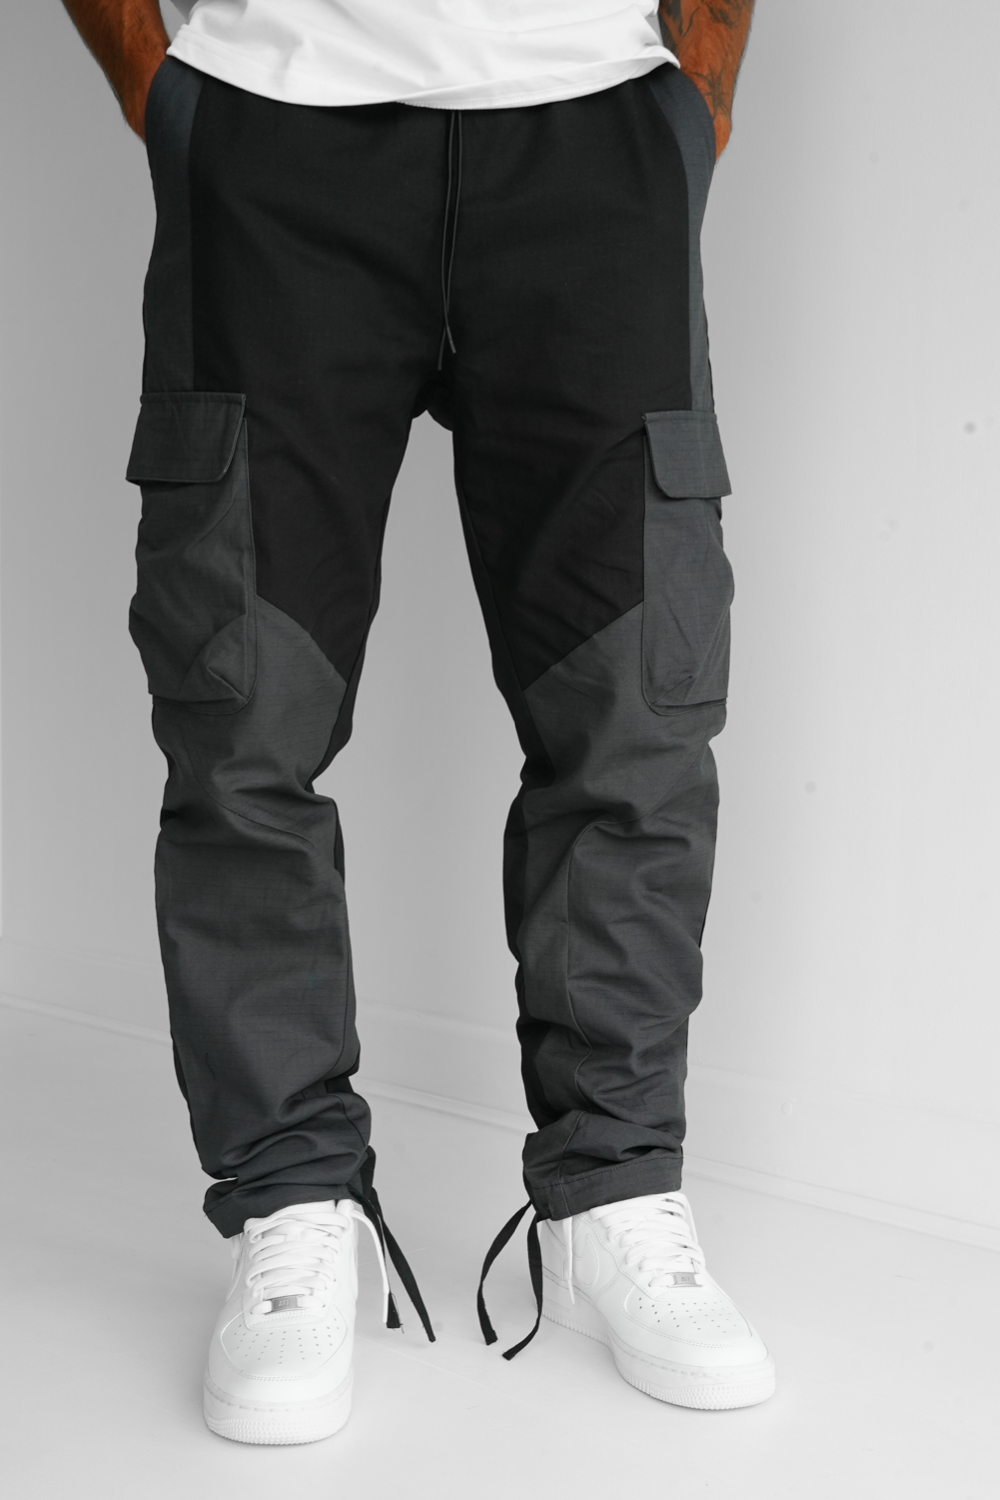 Terrain Panel Cargo Pants - Black/Charcoal (Buy 2 free shipping)